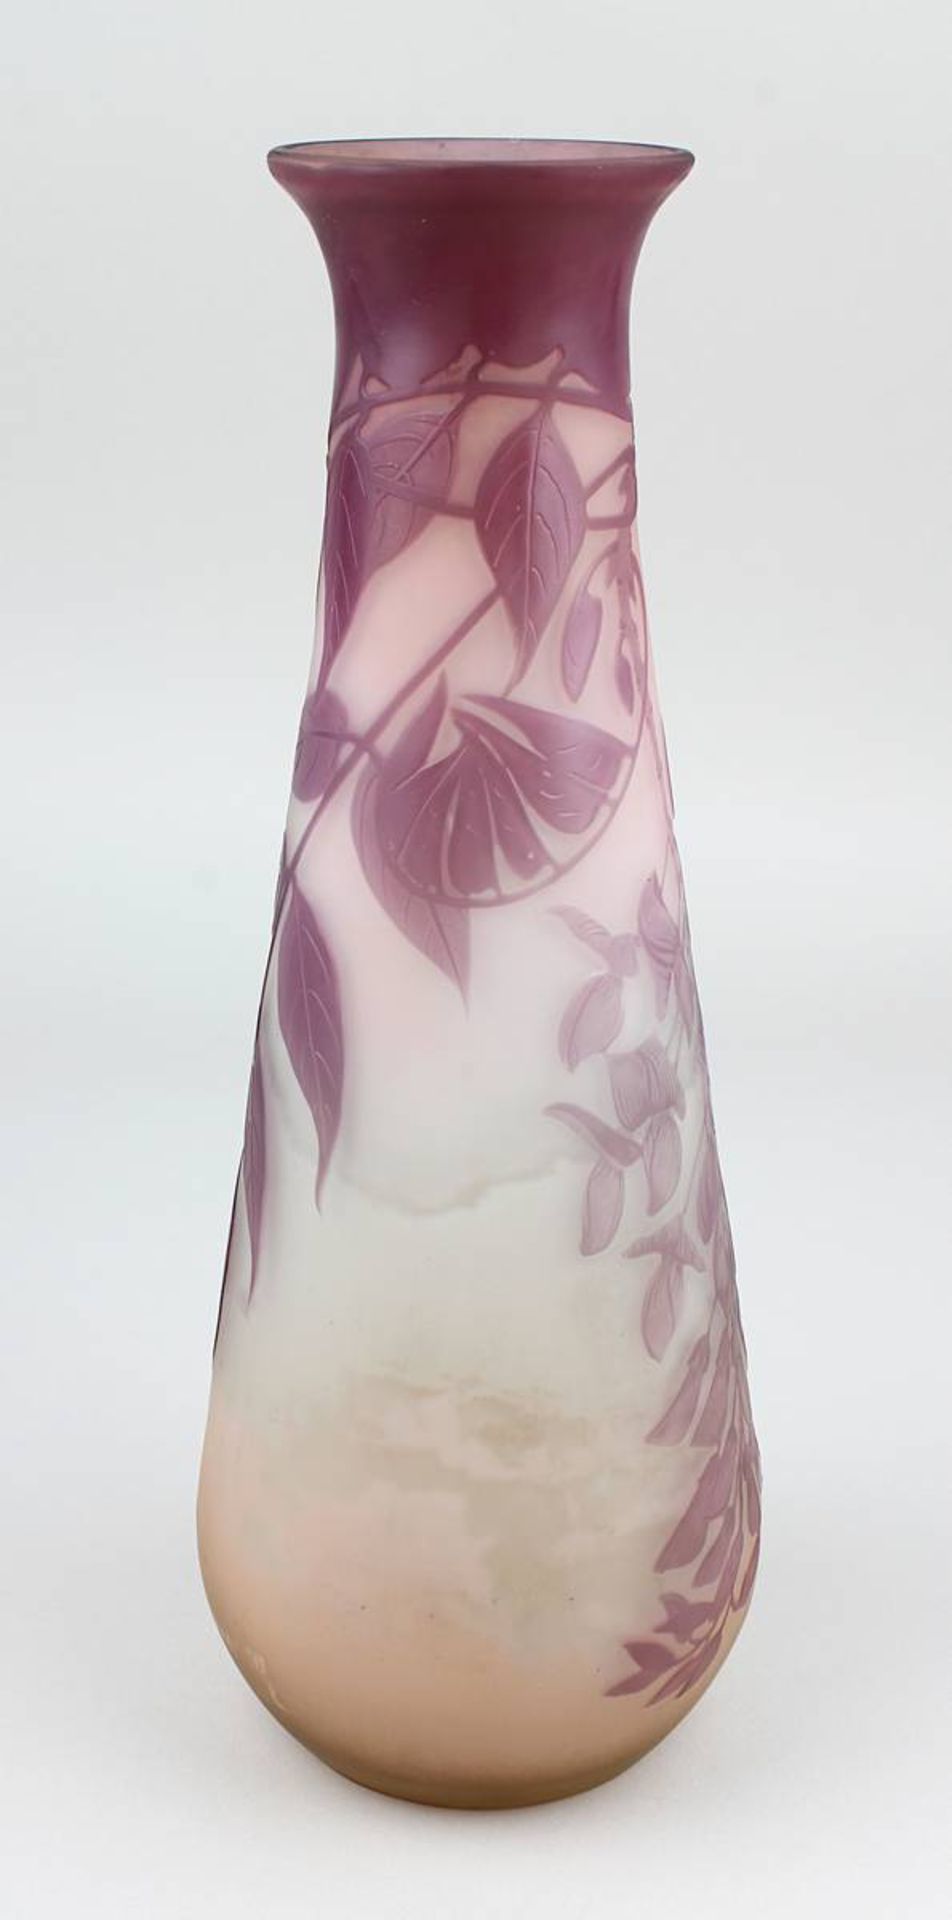 Gallé Jugendstil-Vase mit Glyziniendekor, Nancy 1904 - 1906, keulenförmiger Klarglaskorpus, innen - Image 4 of 4